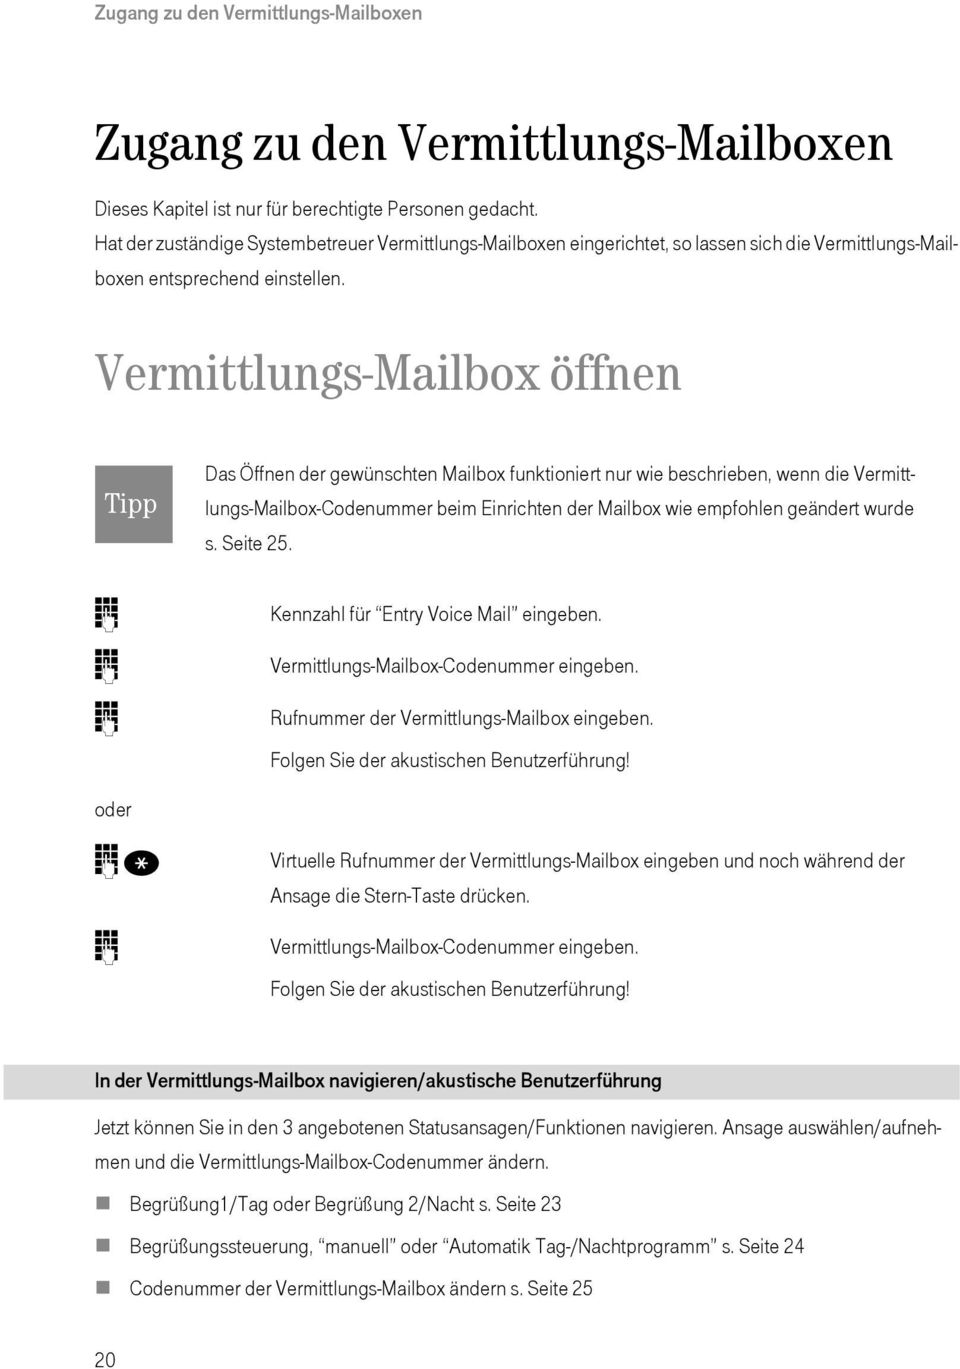 Vrmittluns-Mailbx öffnn Tipp Das Öffnn dr wünschtn Mailbx funktinirt nur wi bschribn, wnn di Vrmittluns-Mailbx-Cdnummr bim Einrichtn dr Mailbx wi mpfhln ändrt wurd s. Sit 25.